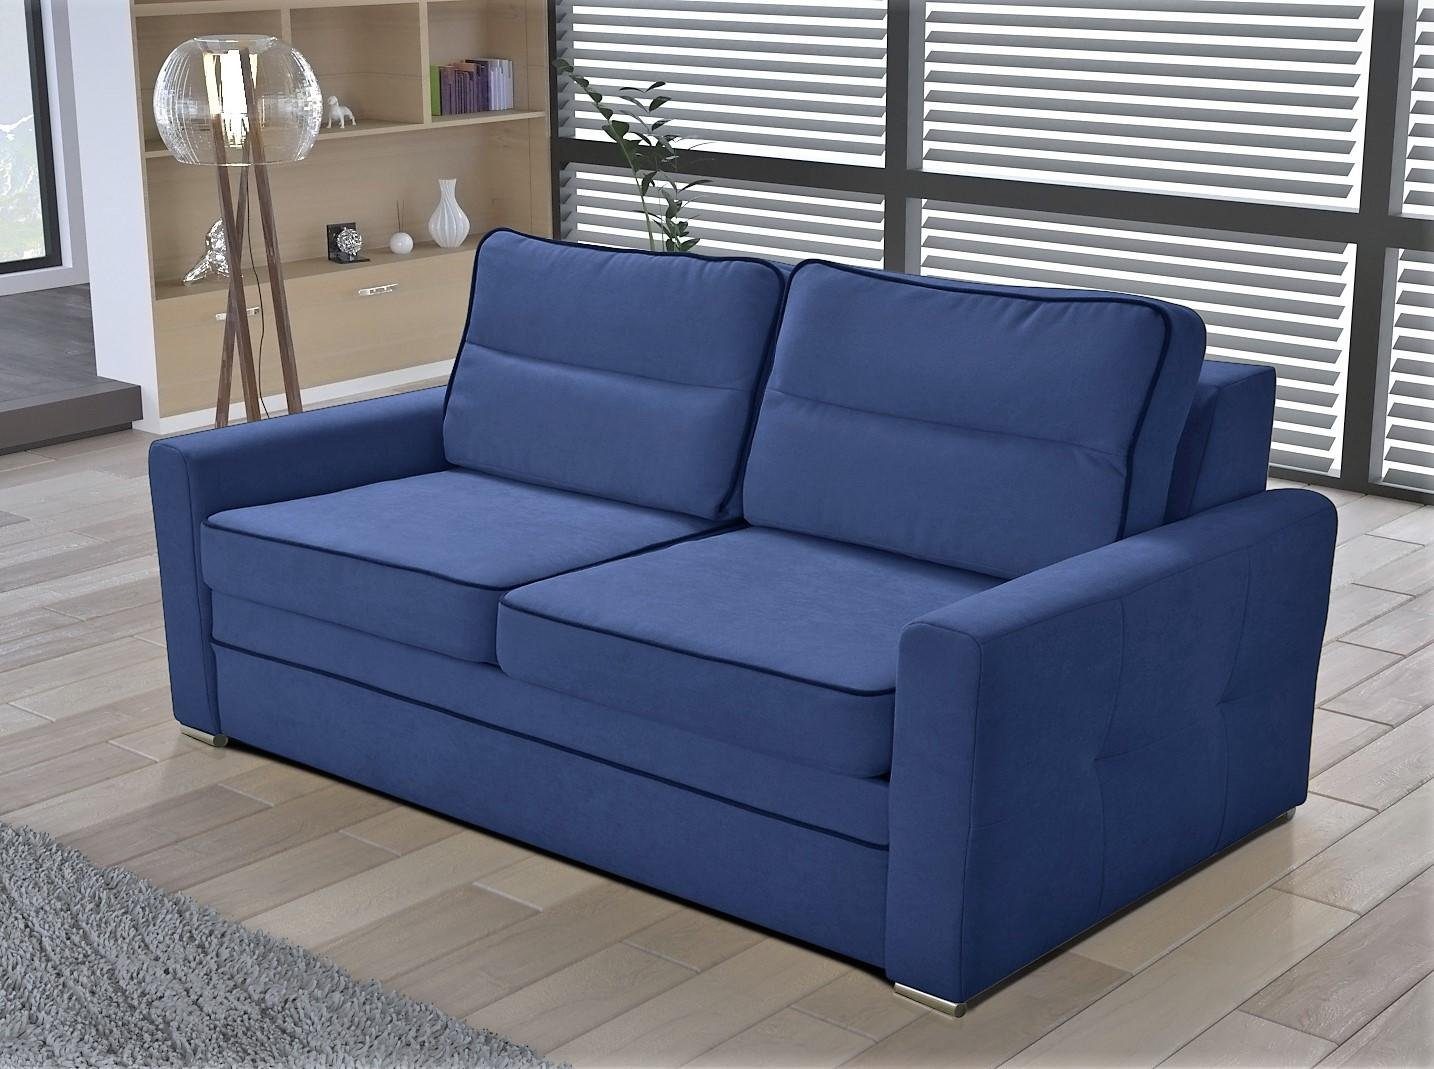 JVmoebel Sofa, Blau Mit Bettfunktion